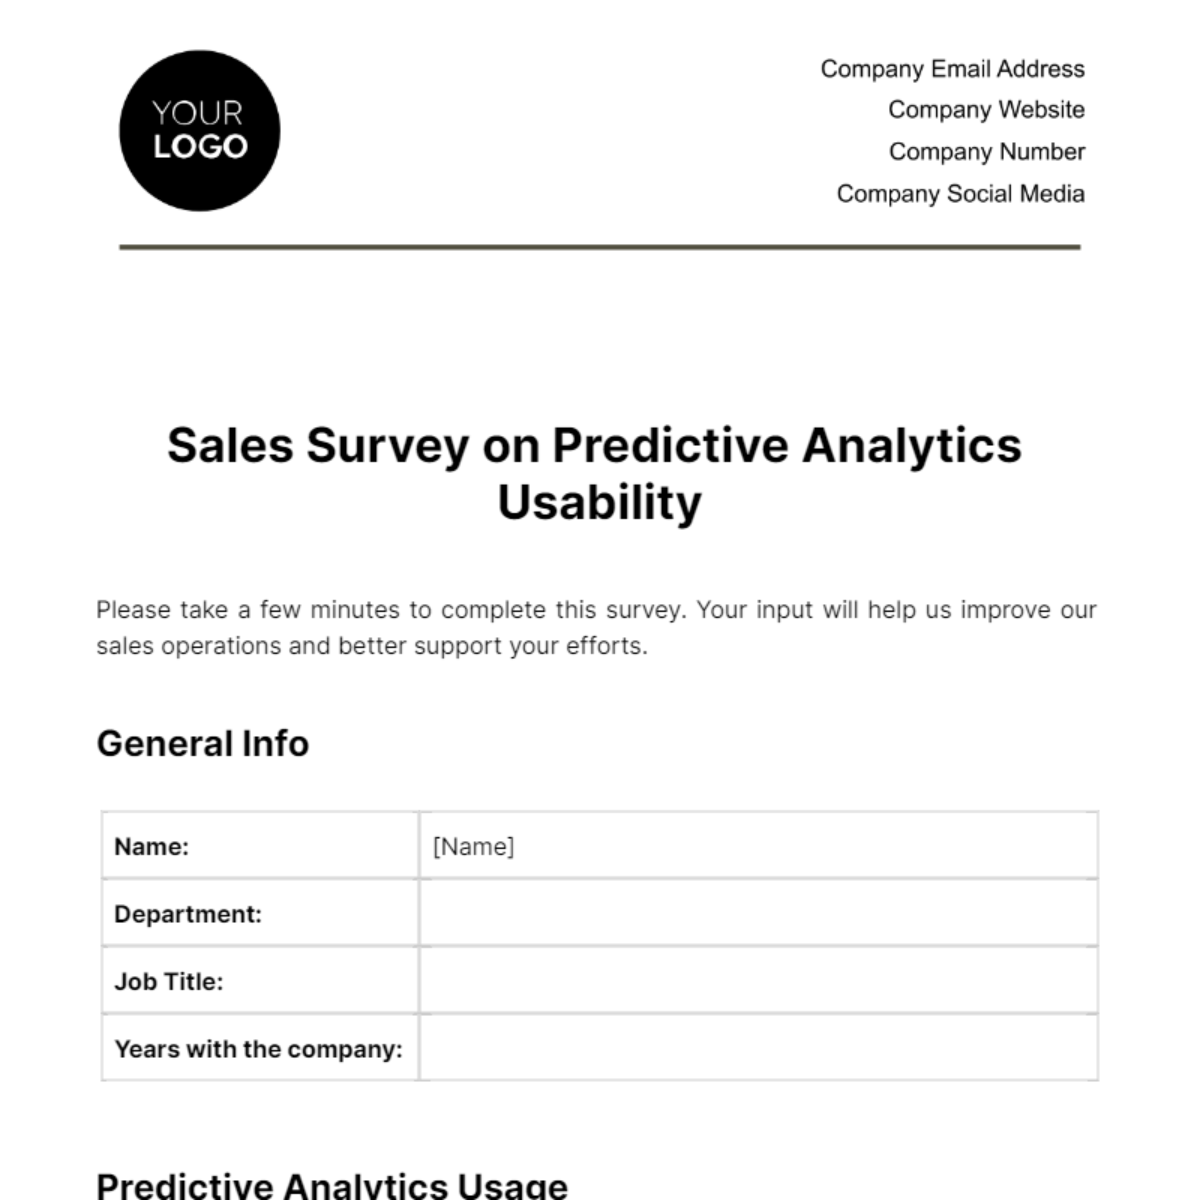 Free Sales Survey on Predictive Analytics Usability Template